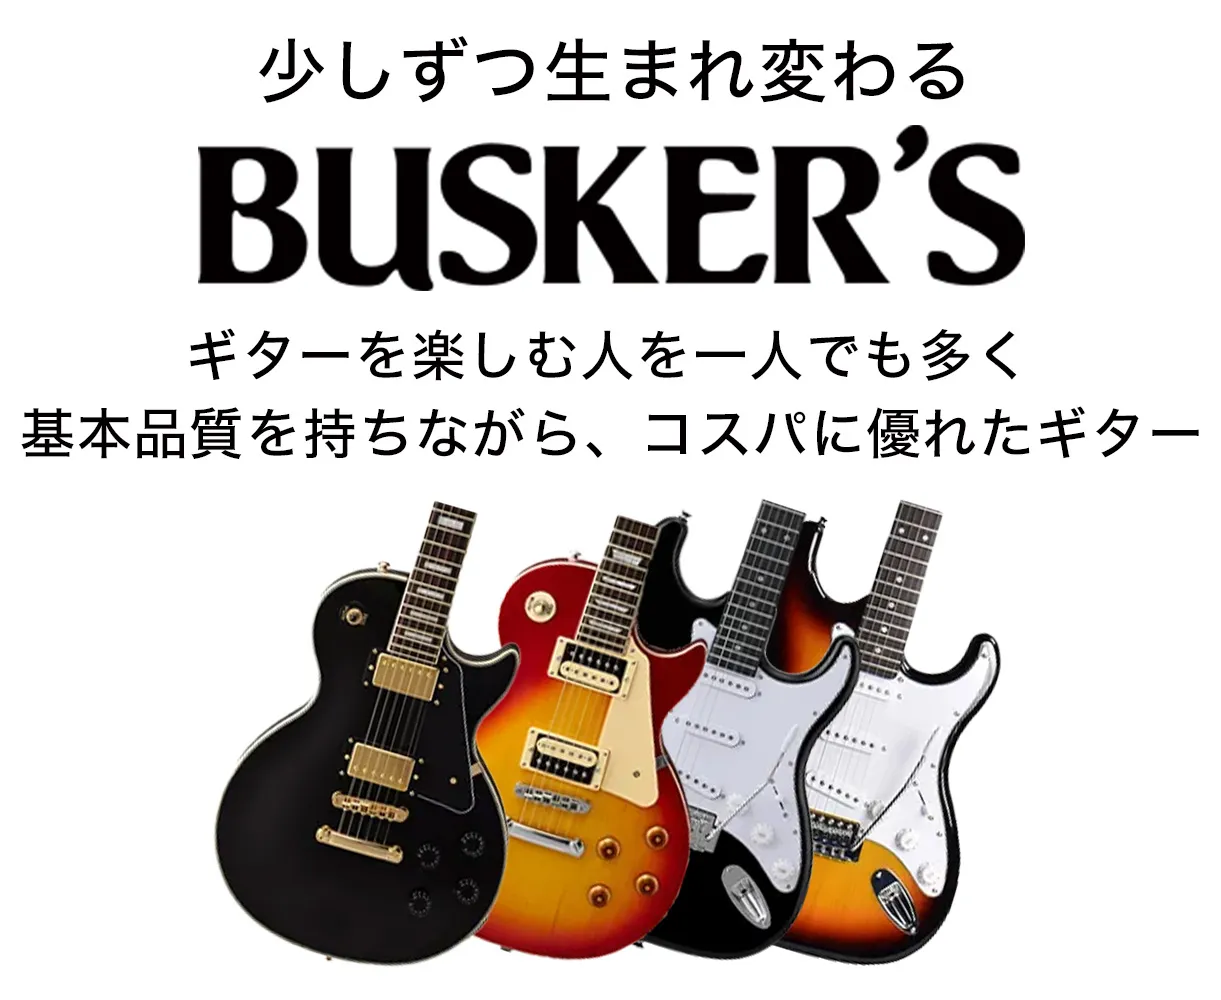 BUSKER'S / バスカーズ エレキギター | 島村楽器オンラインストア